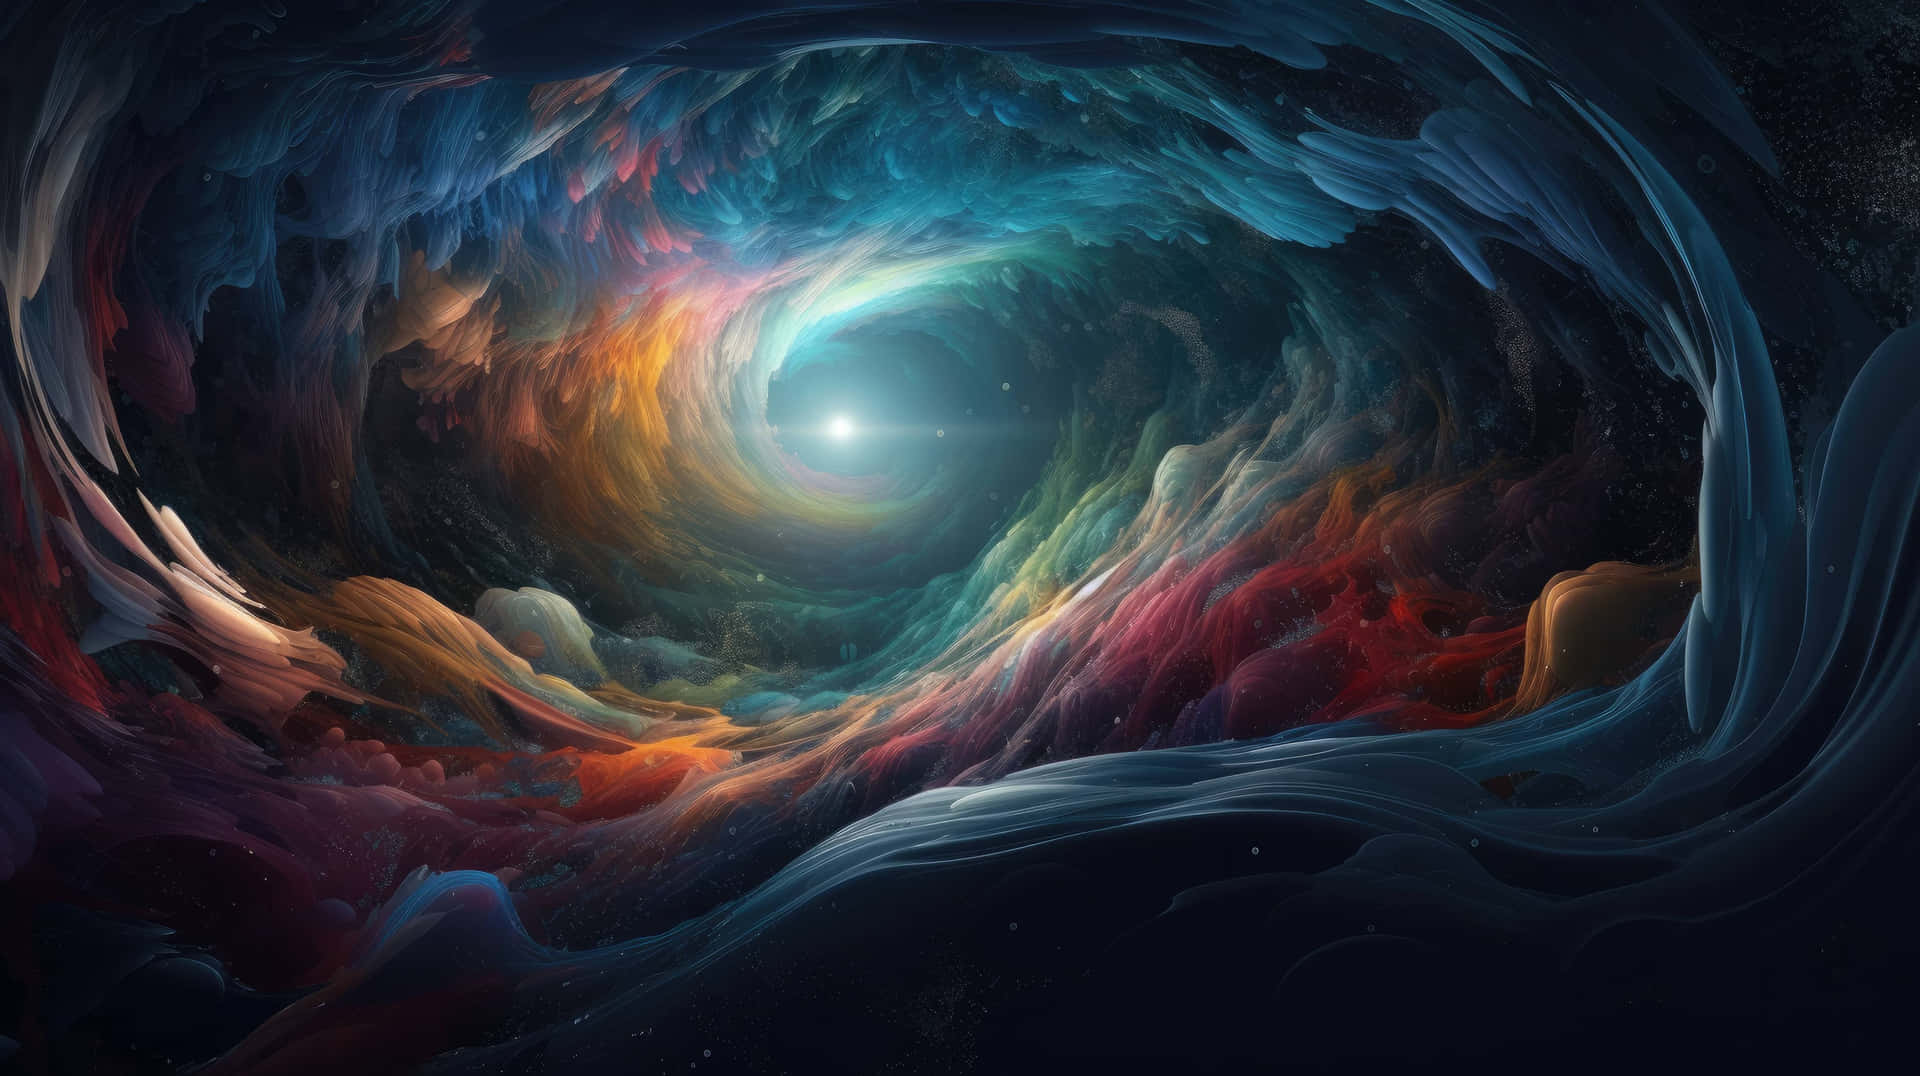 Cosmic Spiral Abstract Landscape.jpg Wallpaper